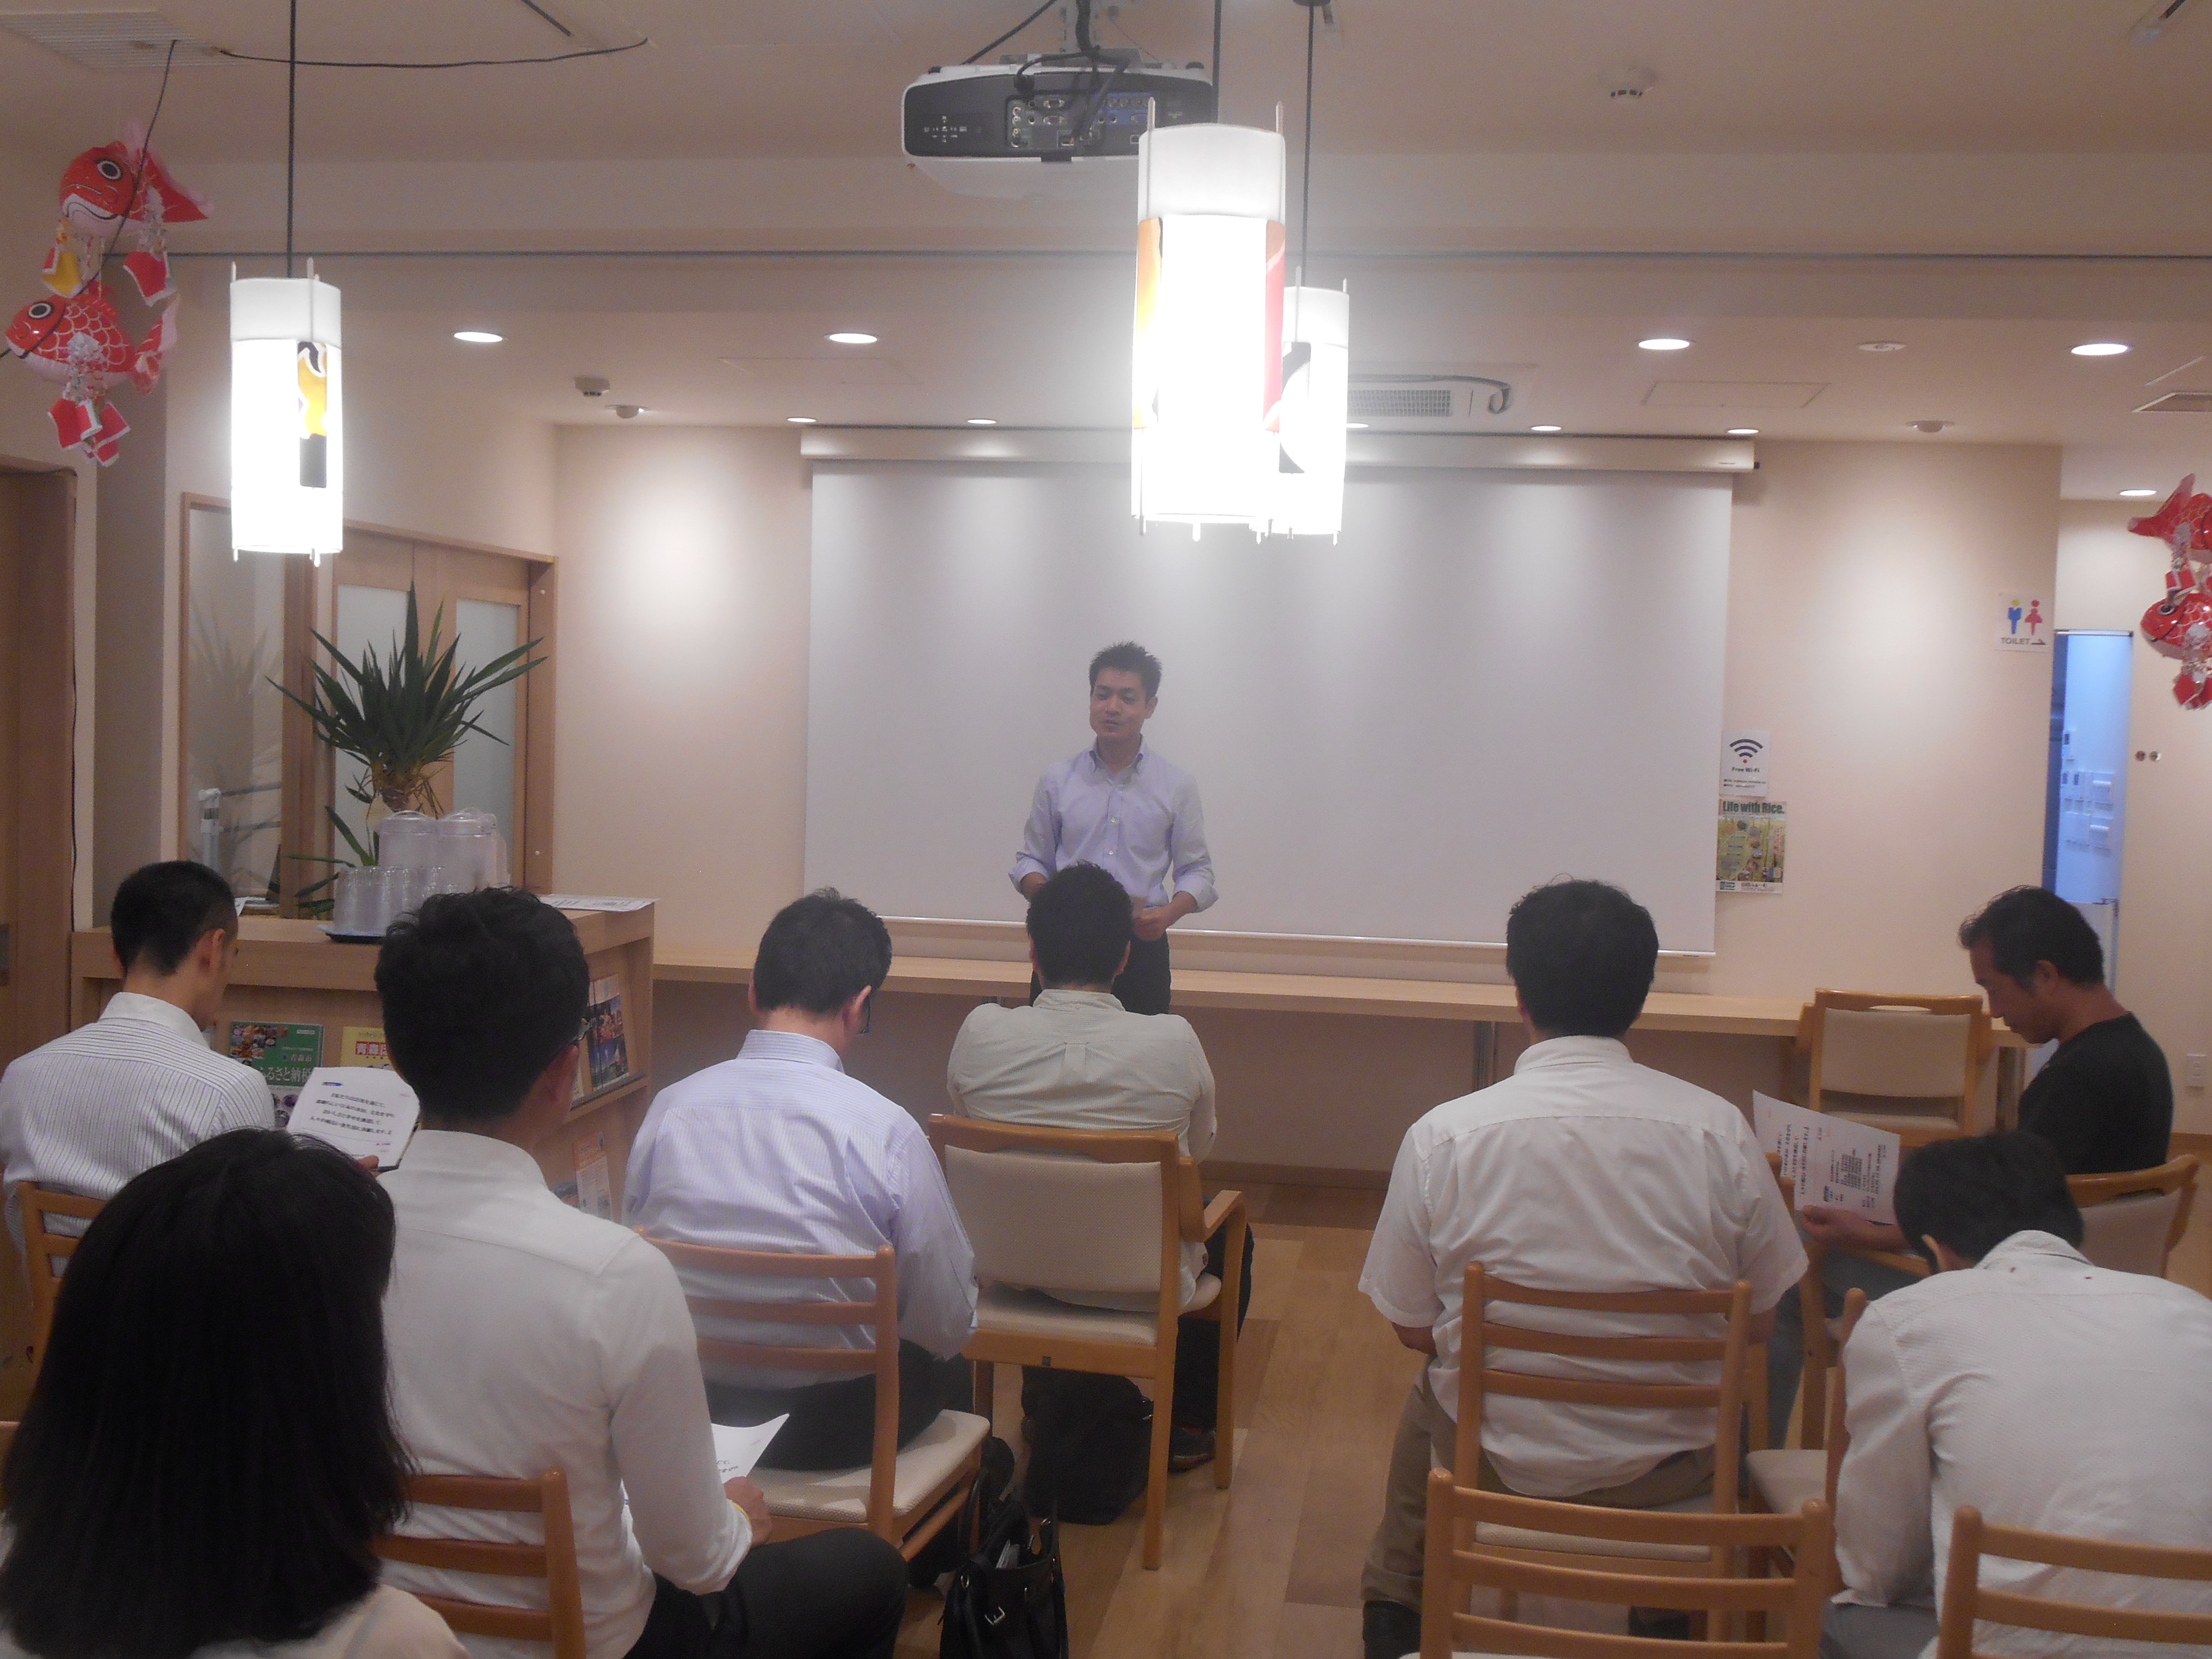 DSCN1889 - AoMoLink〜赤坂〜の第2回勉強会&交流会開催します。